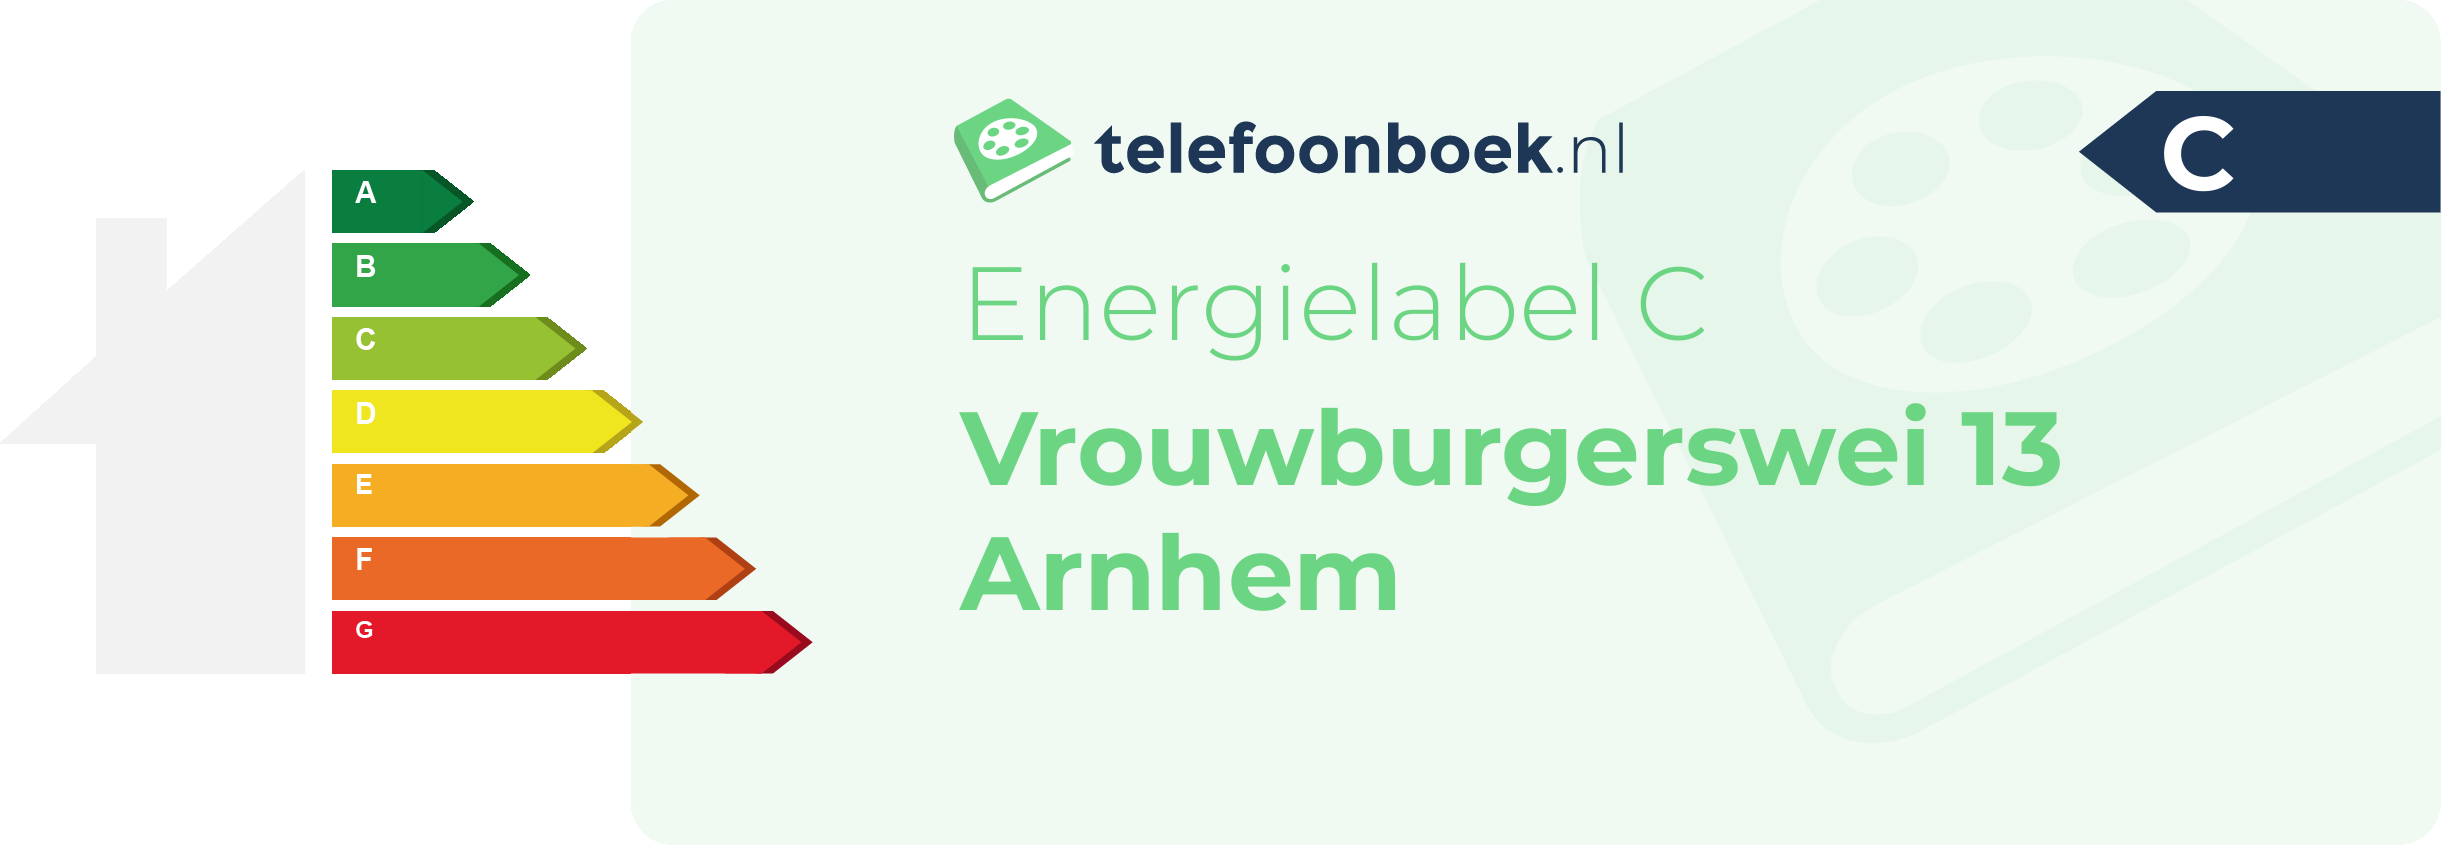 Energielabel Vrouwburgerswei 13 Arnhem